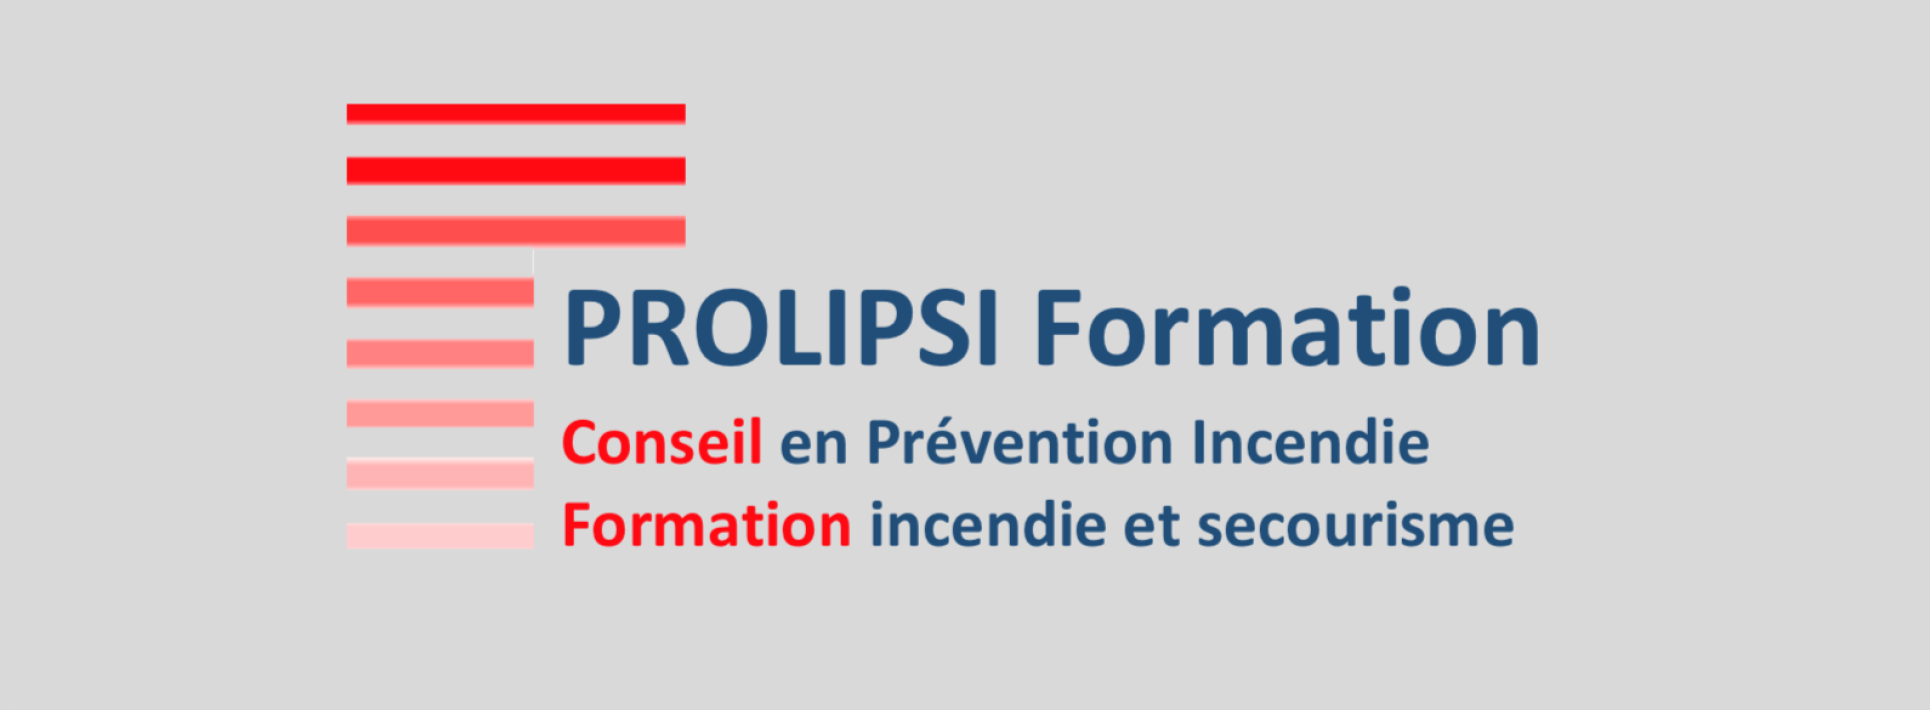 logo-prolipsi-formation-4804692